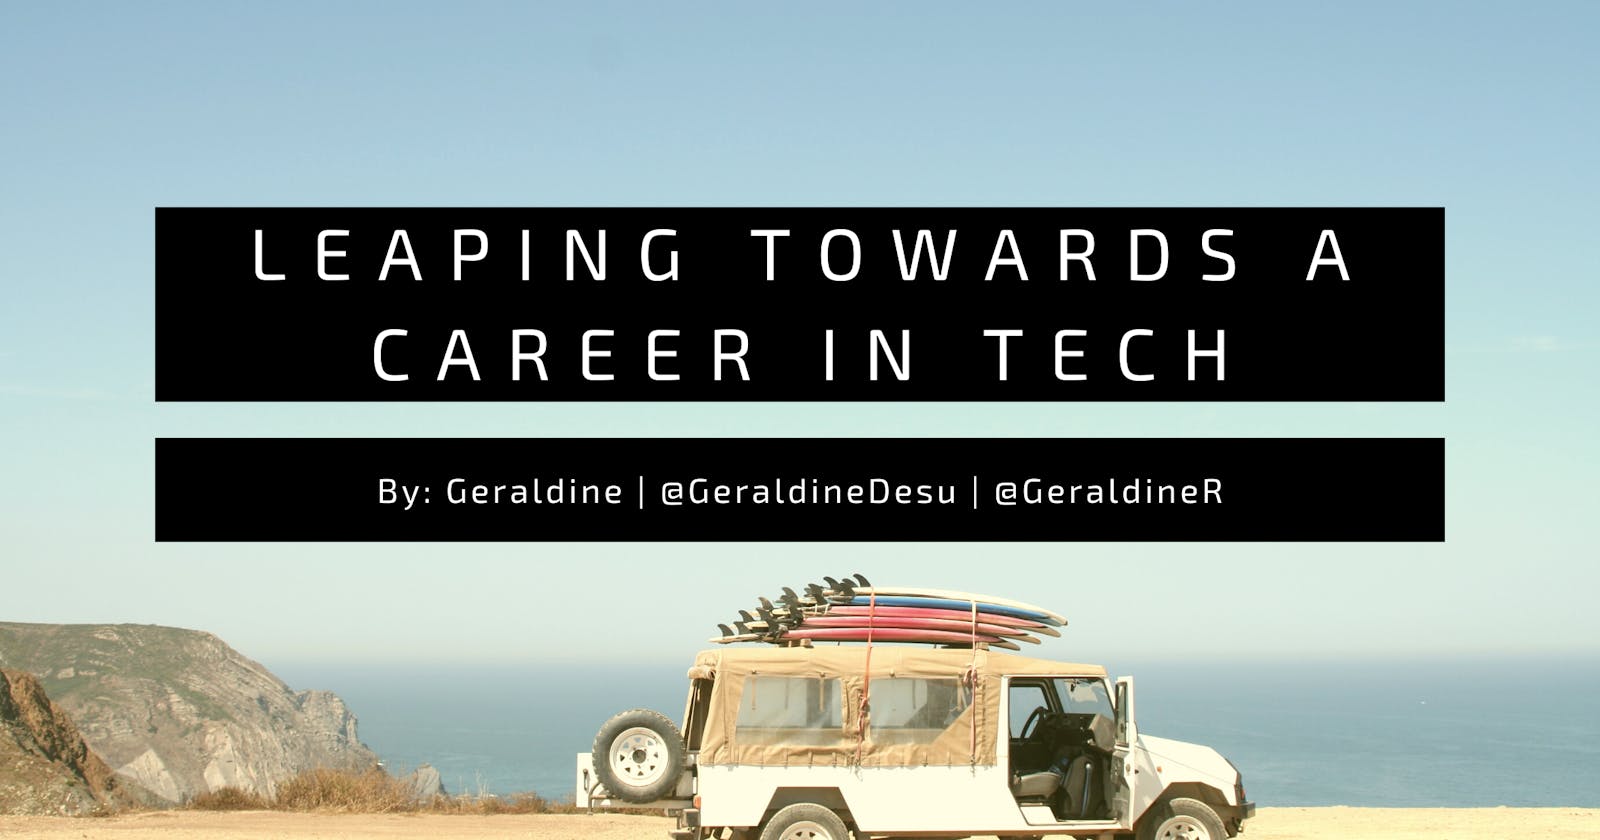 Hi I'm Geraldine! I'm Leaping Towards a Career in Tech